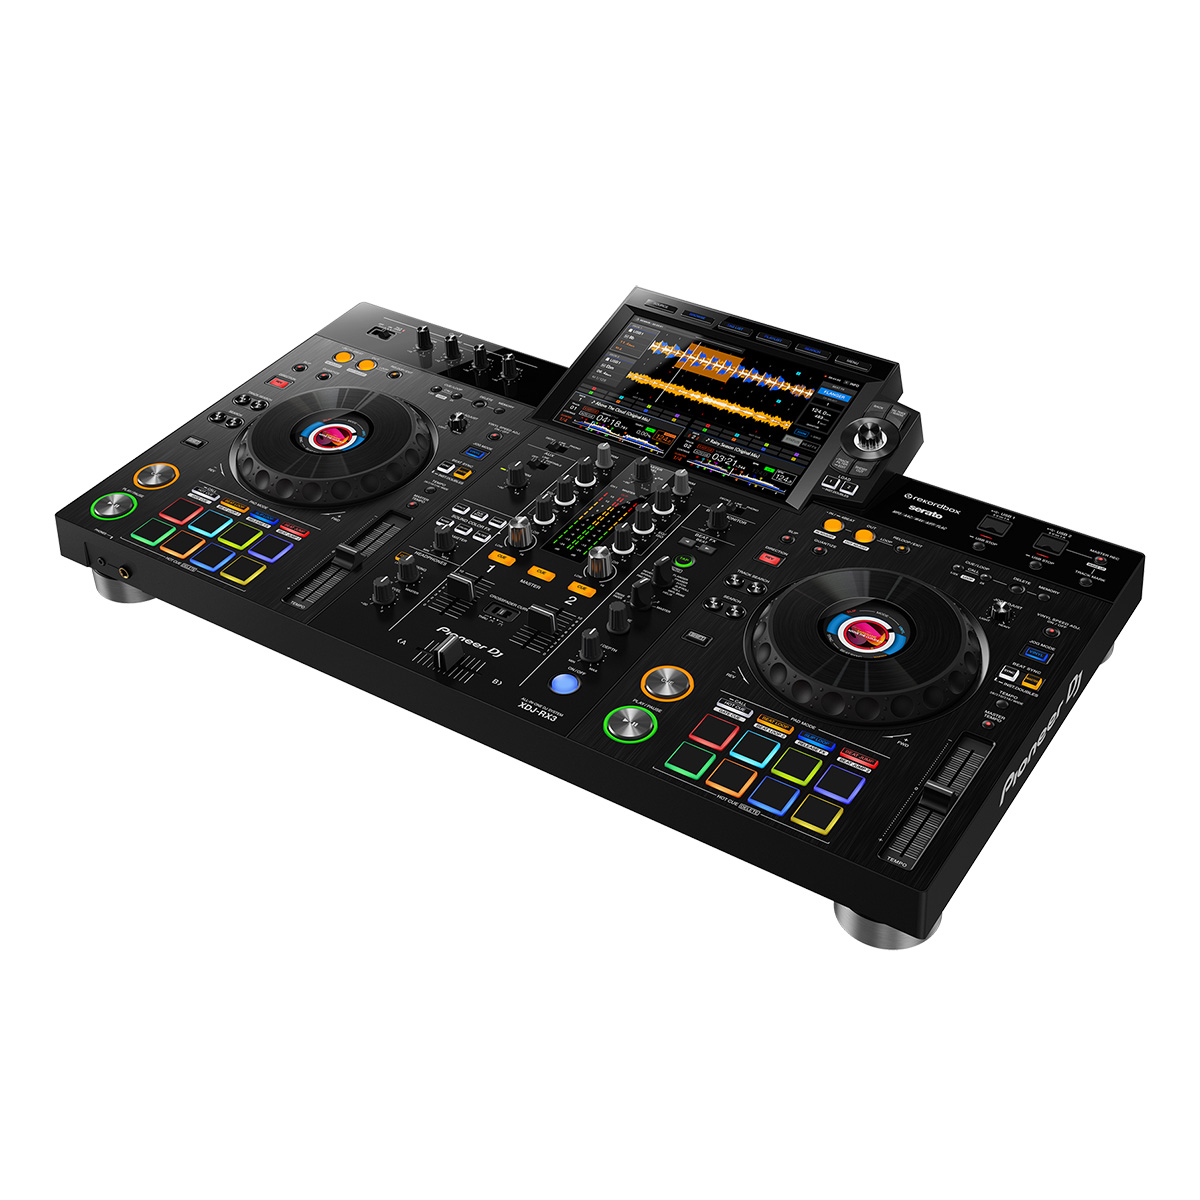 Pioneer DJ ( パイオニア DJ )が、10.1インチのタッチディスプレイを搭載したオールインワンDJシステム「XDJ-RX3」を発売します。 XDJ-RX3は、10.1インチのタッチディスプレイを搭載、直感的なブラウズと正確なミックスを実現したオールインワンDJシステムです。フラッグシッ […]